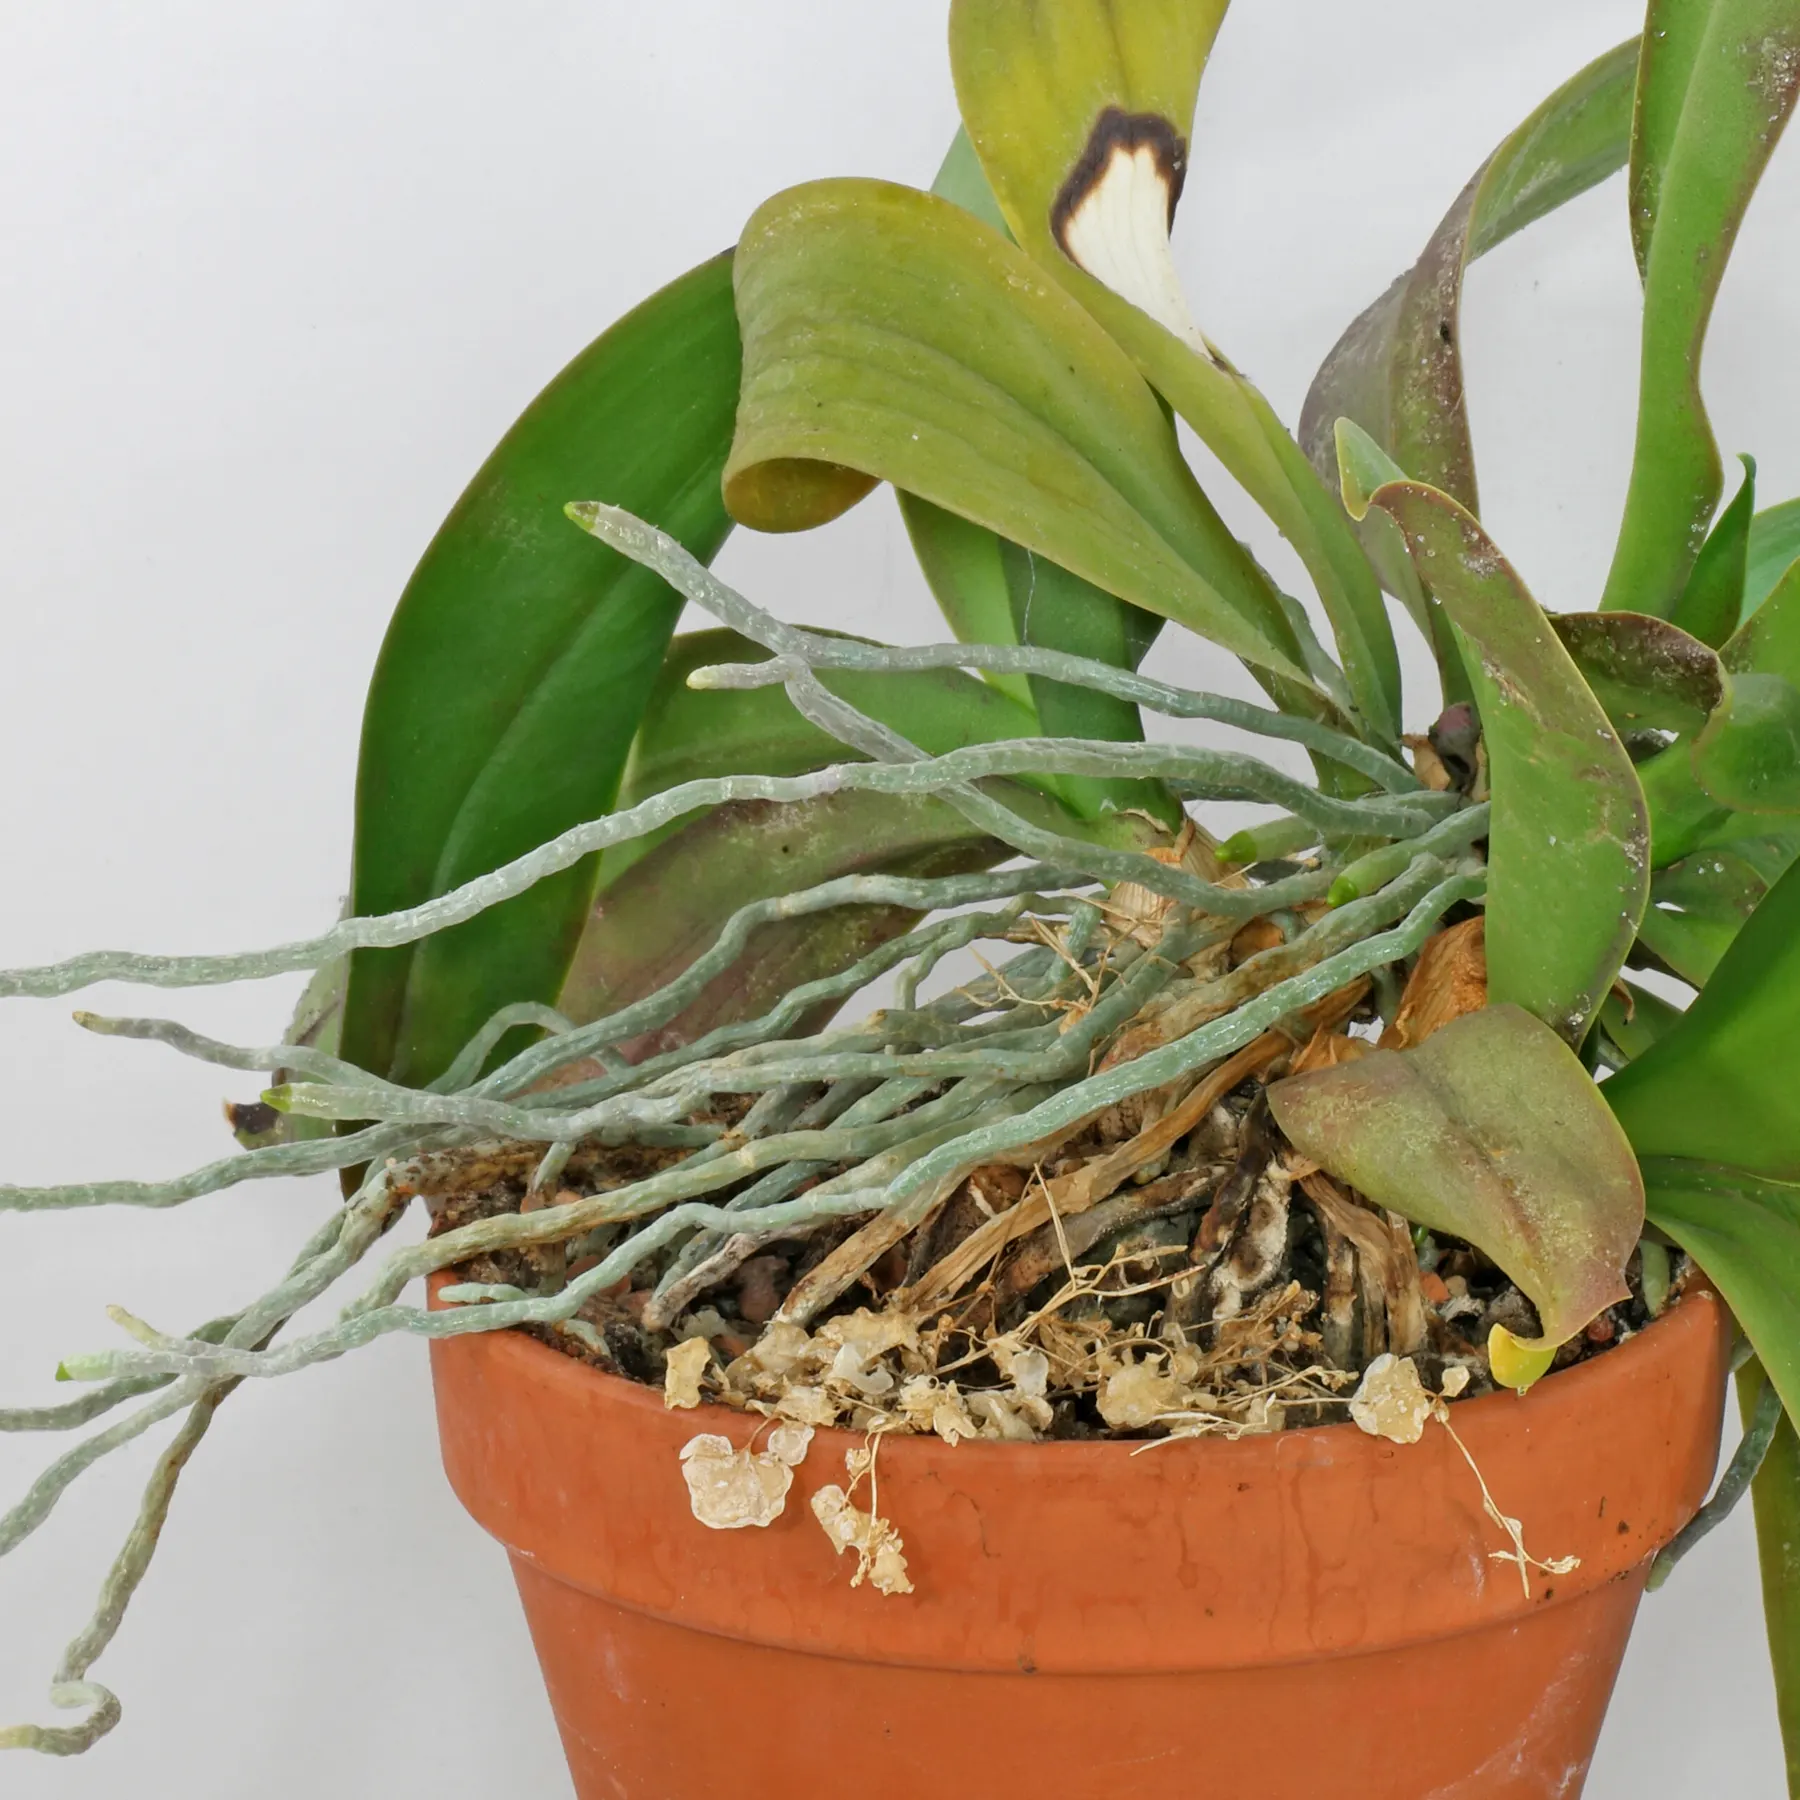 Racines de lorchidee Phalaenopsis